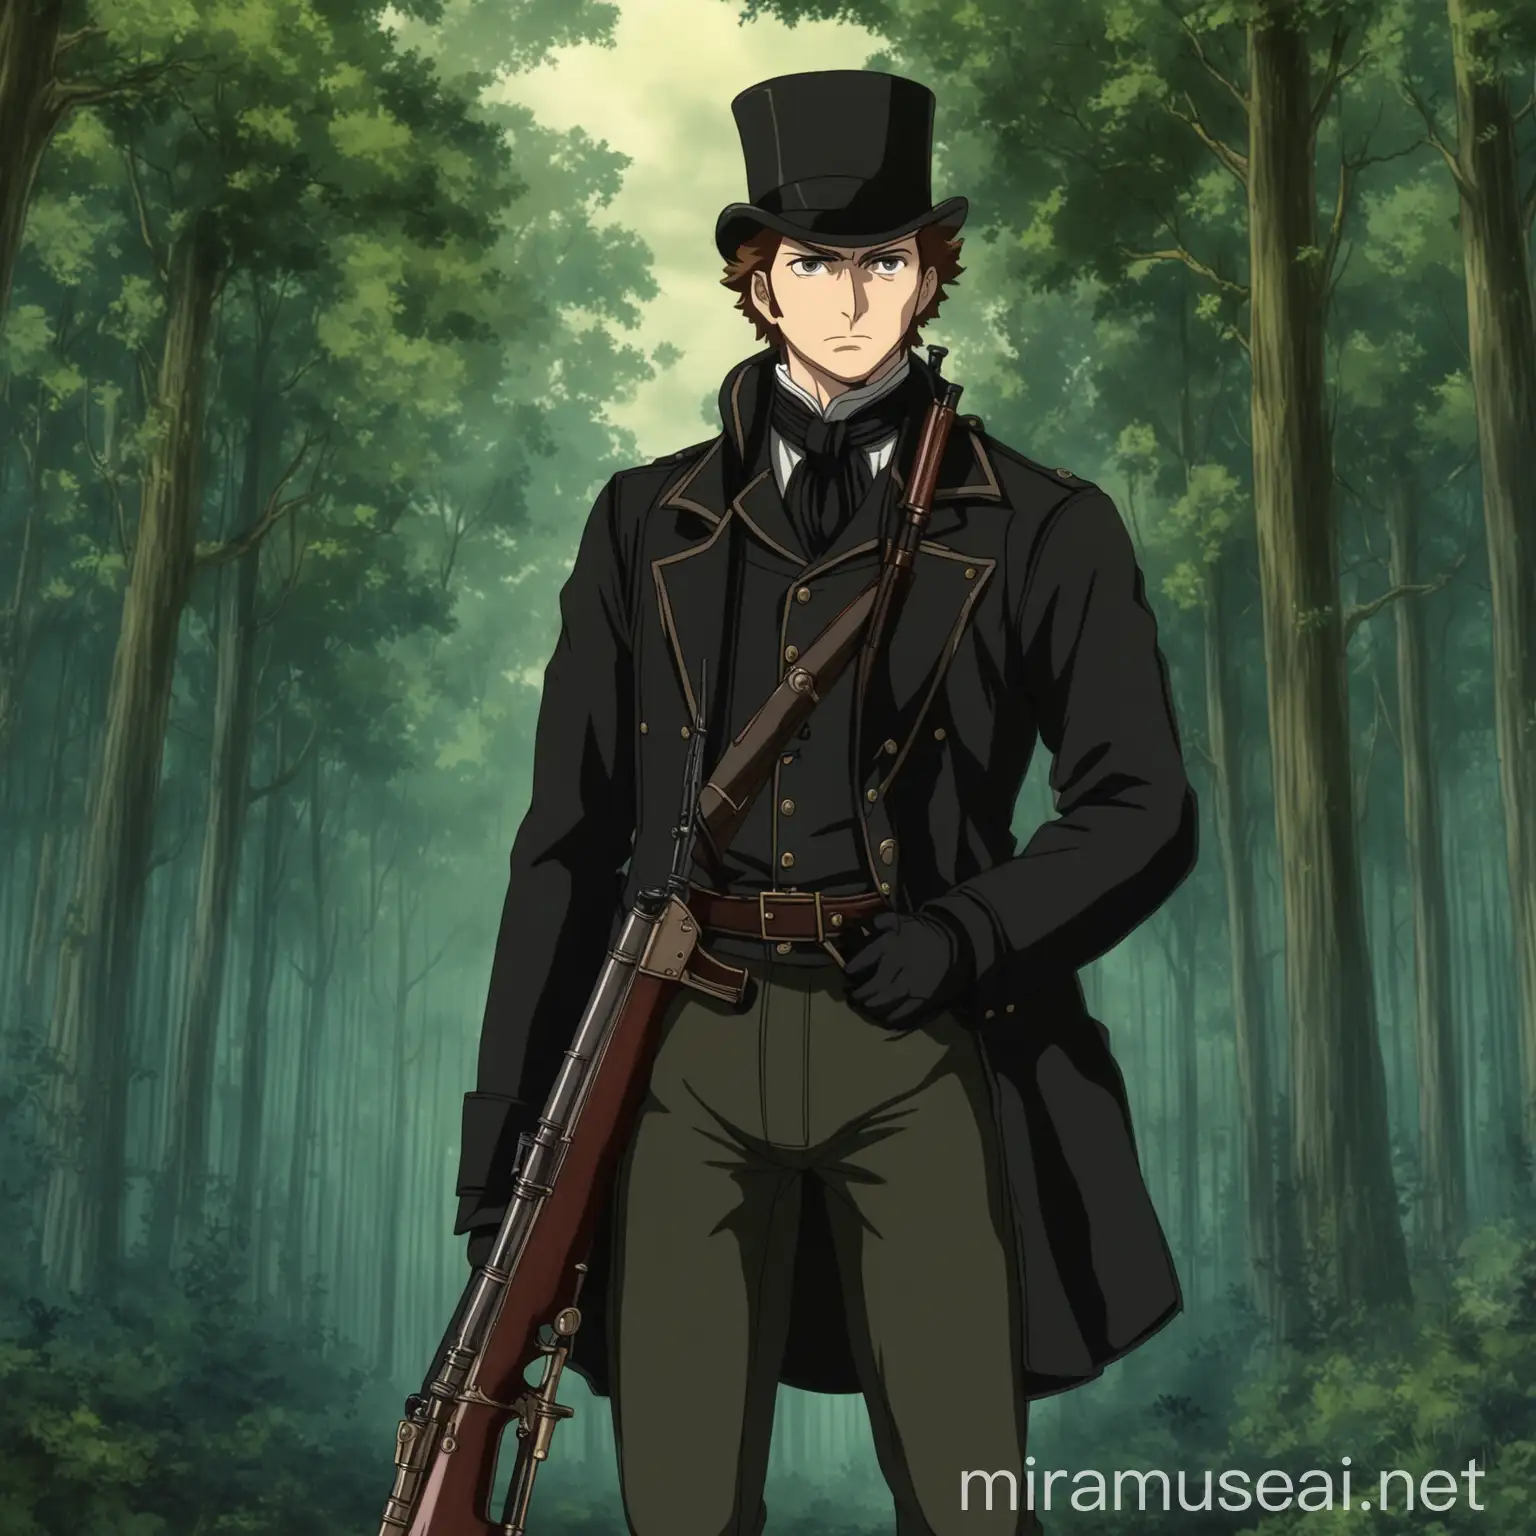 Menacing Victorian Hunter in Anime Forest Scene